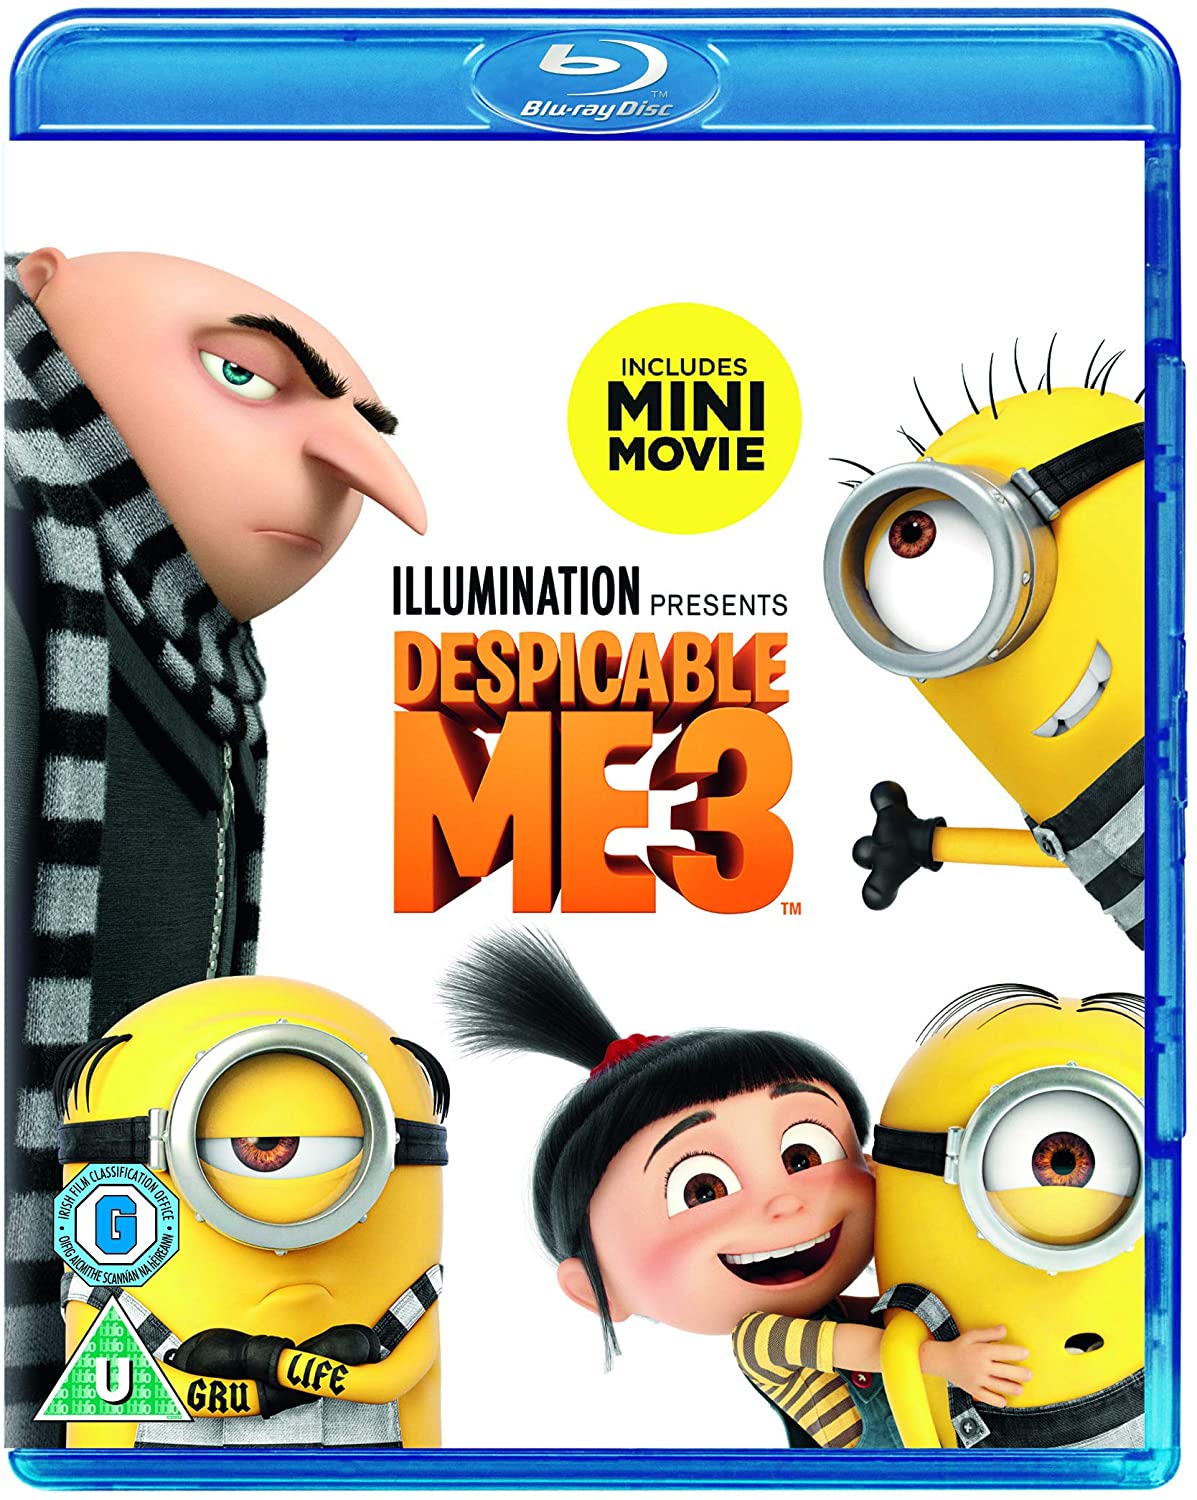 Despicable Me 3 [2017] (Illumination) (Blu-ray)